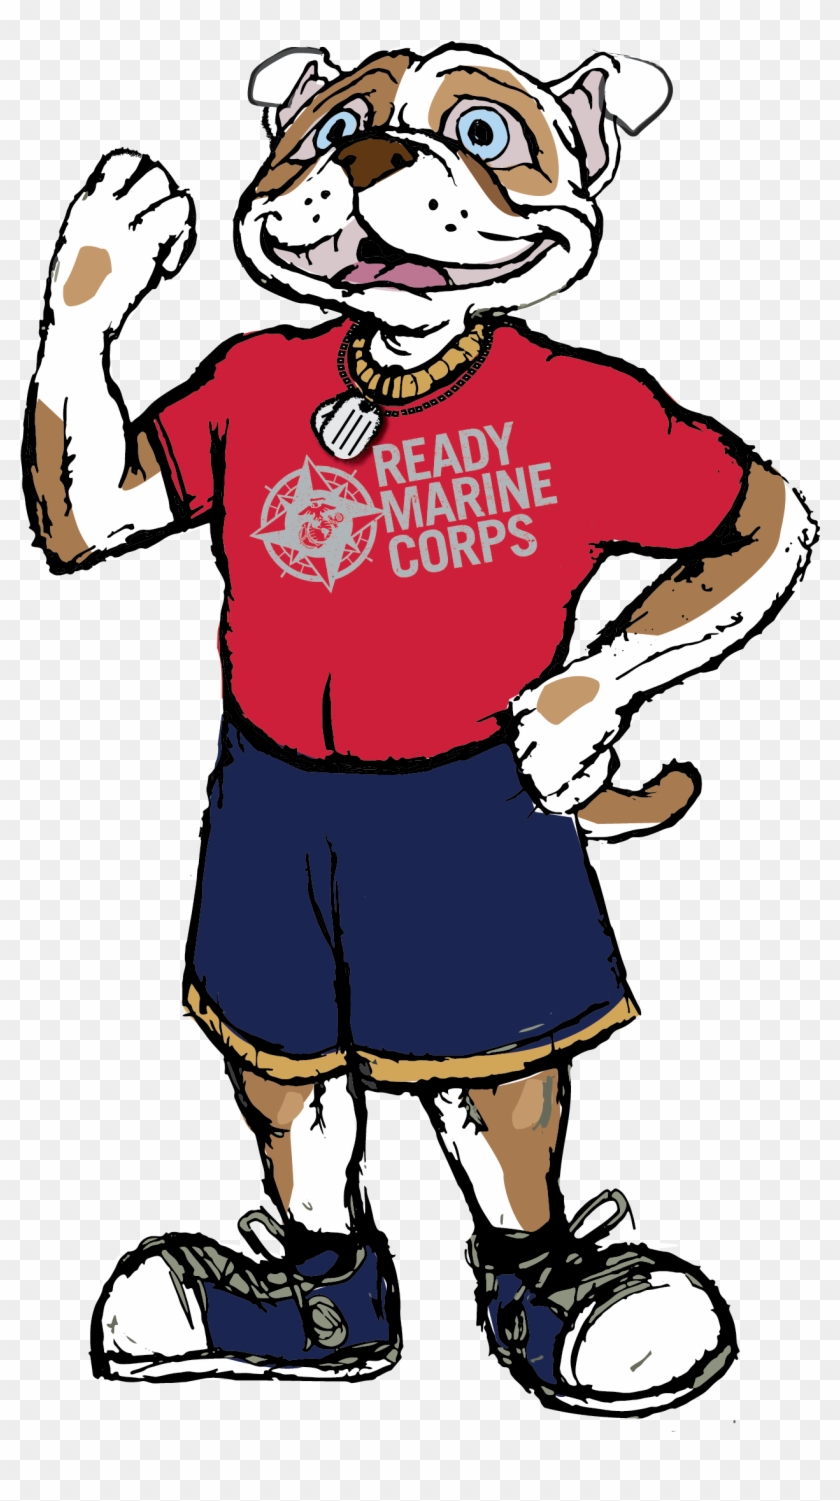 The Ready Marine Corps Kids Mascot - United States Marine Corps #240004